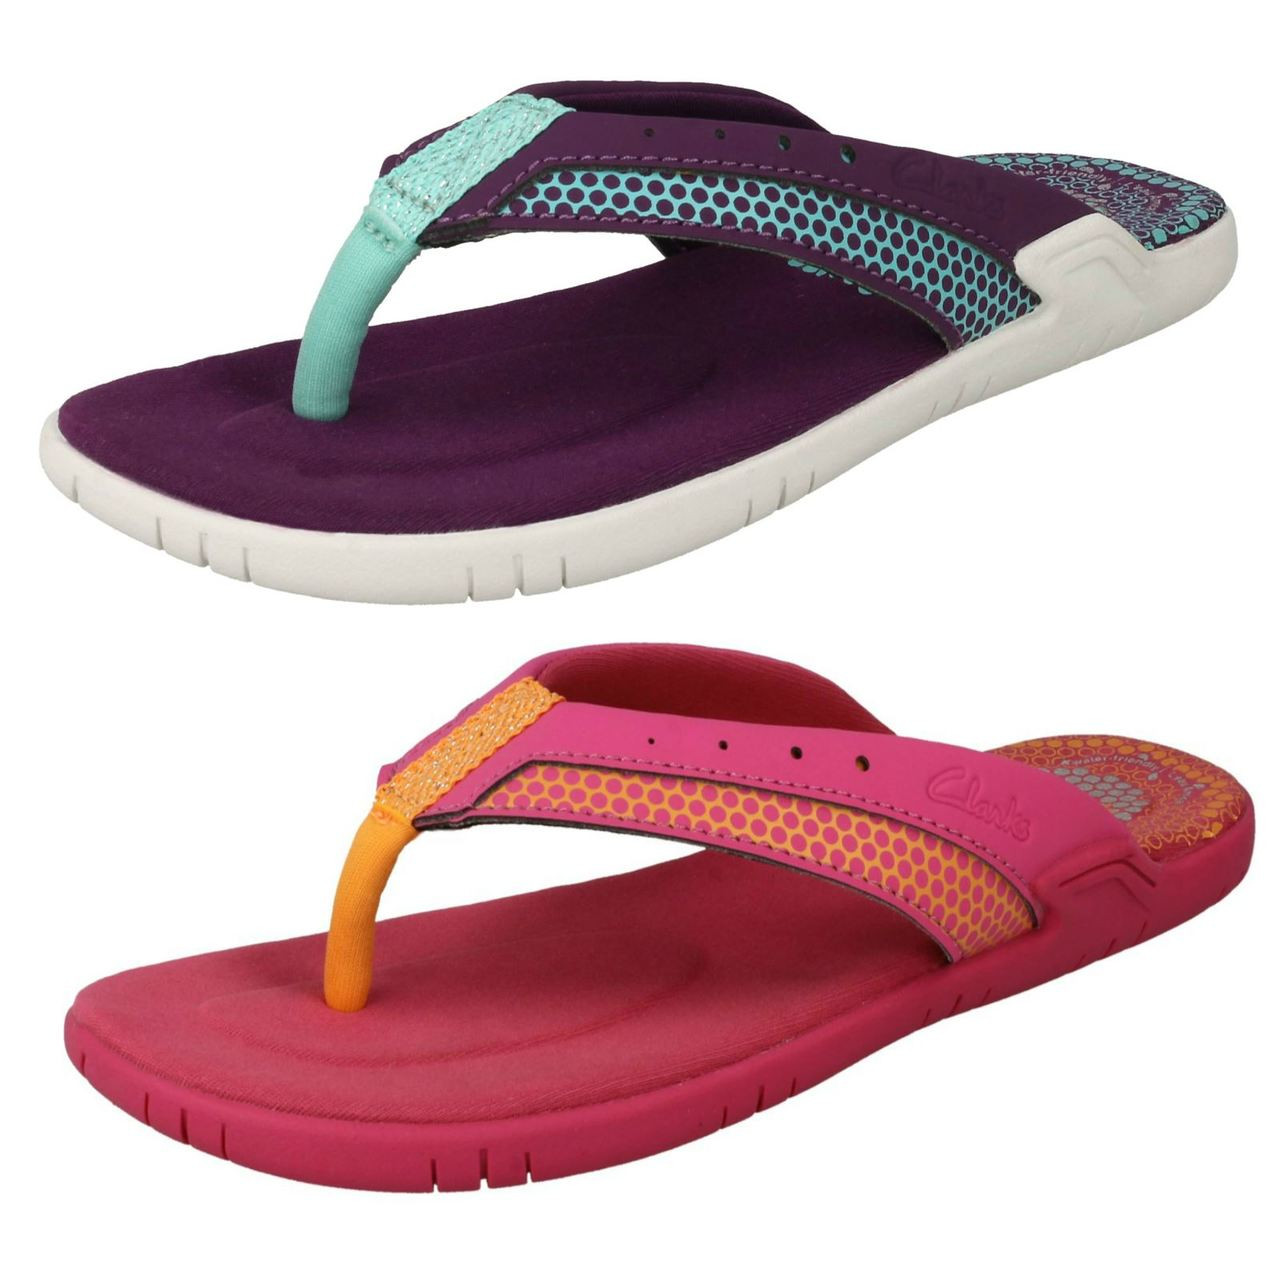 clarks purple sandals